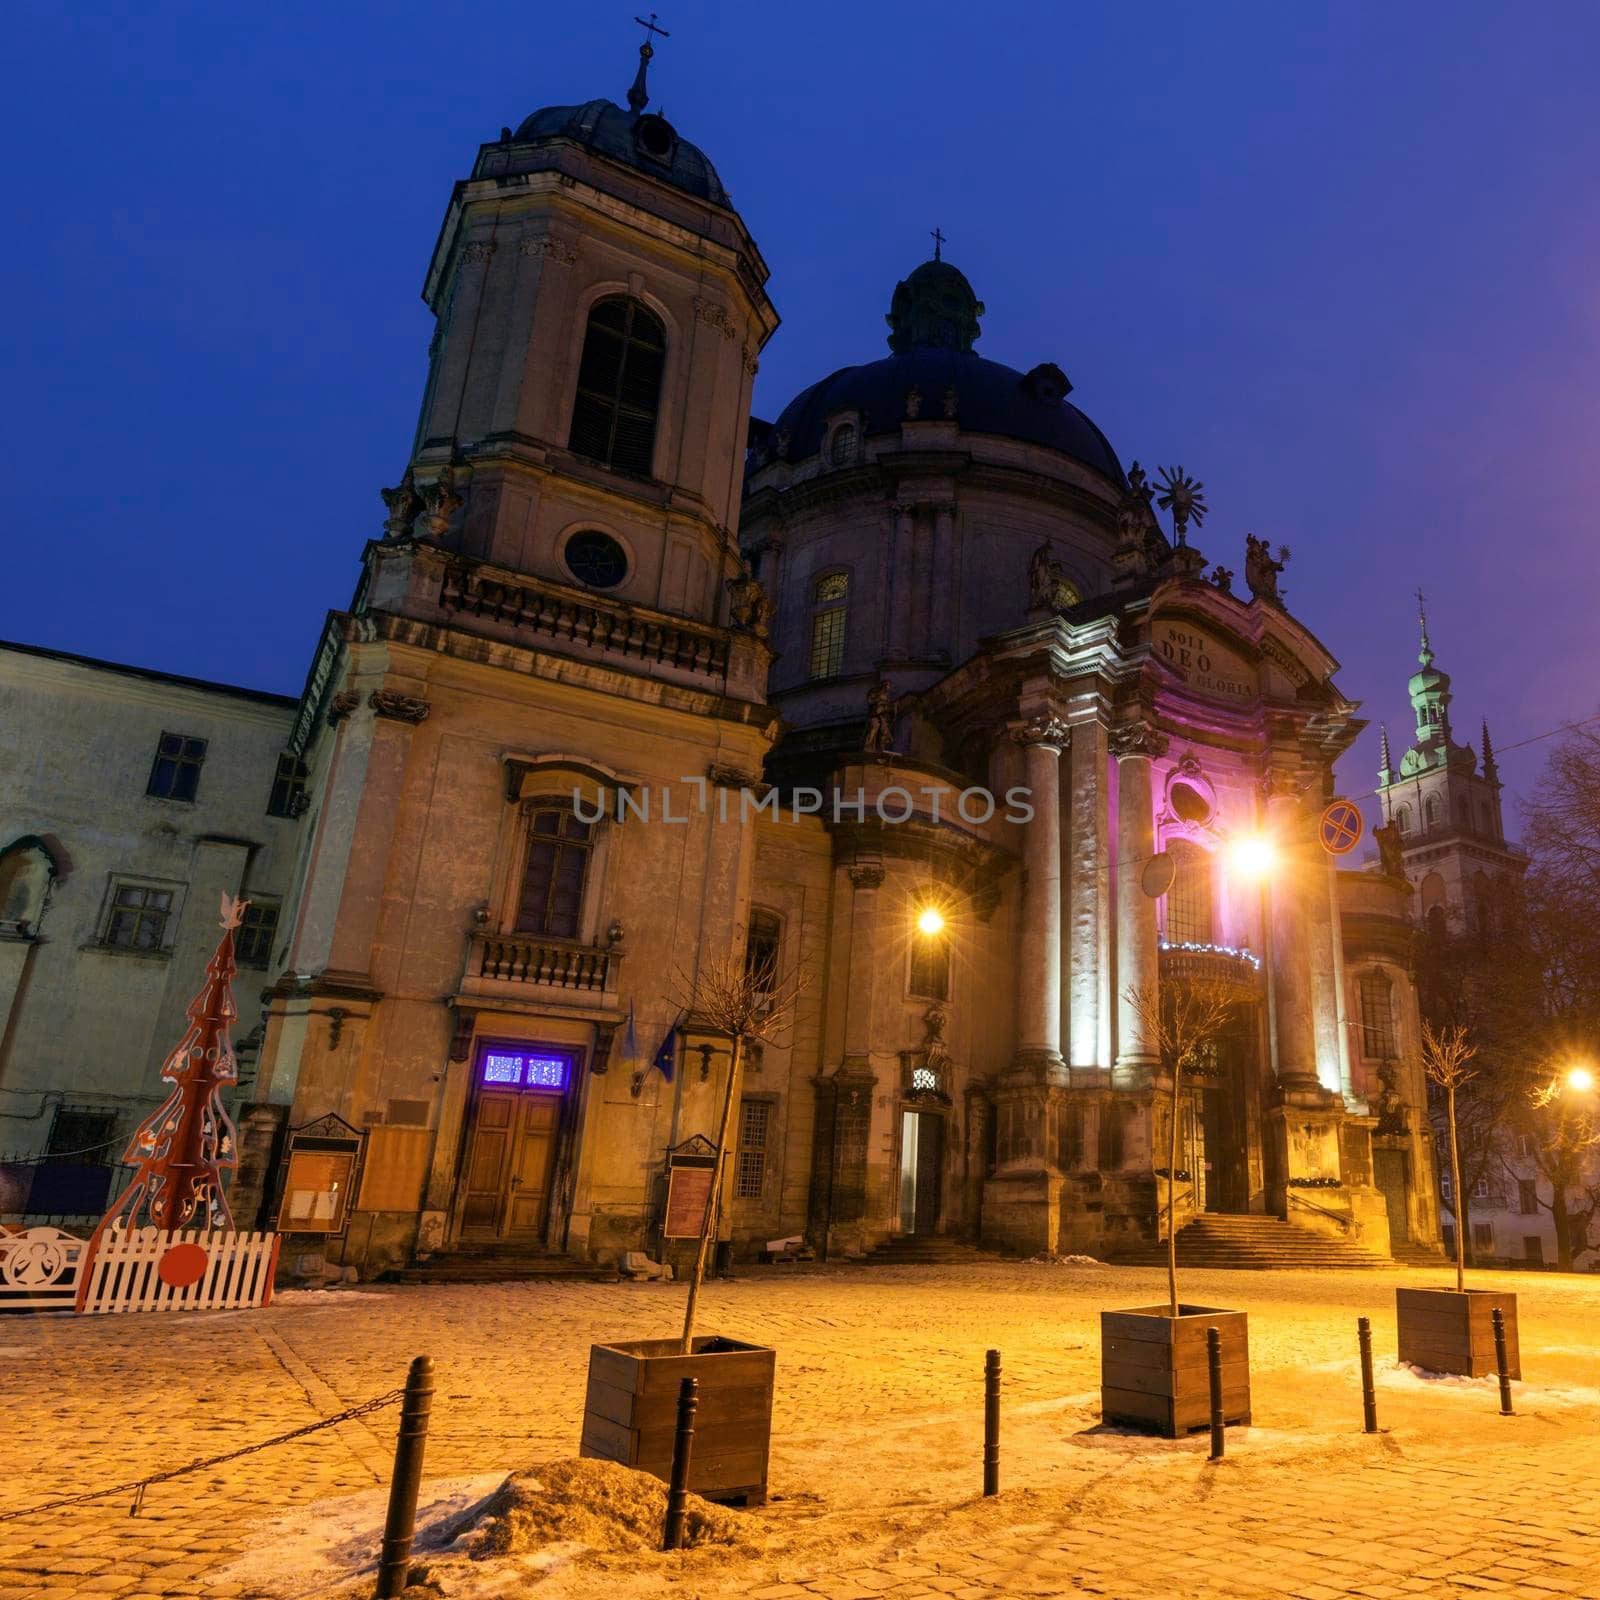 Dominican church of Corpus Christi in Lviv by benkrut